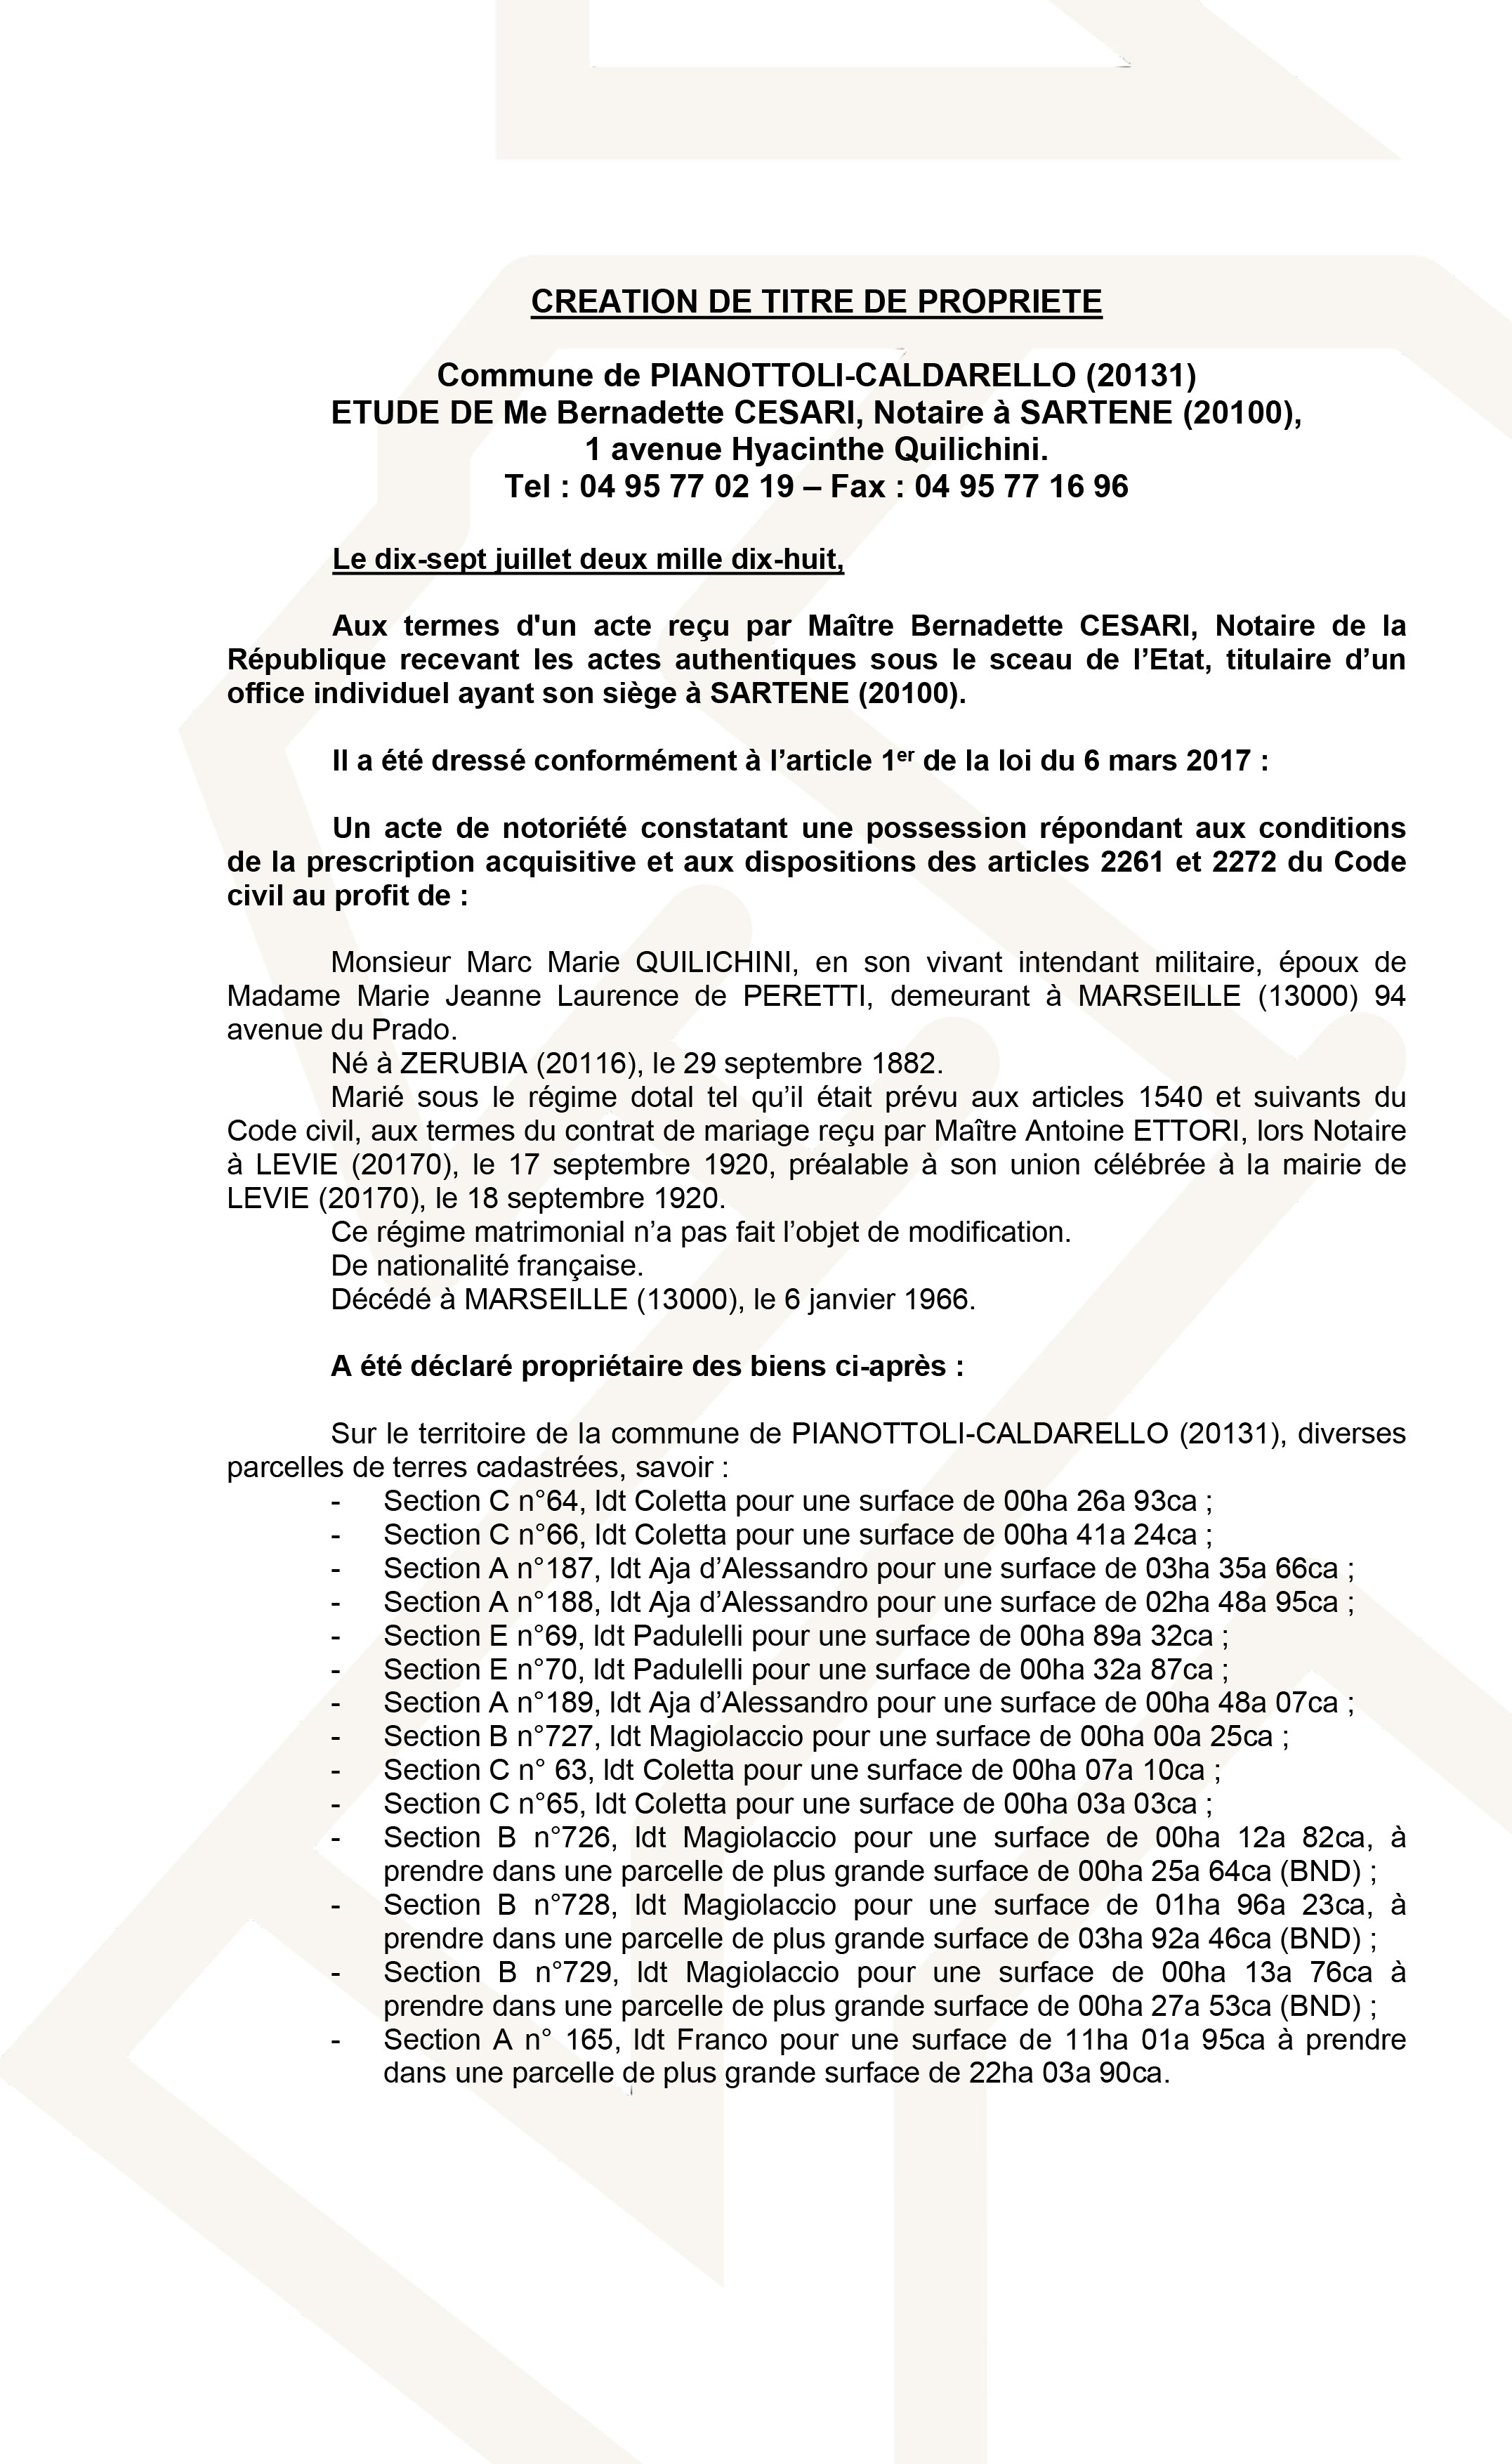 Avis de création de titre de propriété - commune de Pianottoli-Caldarello (Corse du Sud)